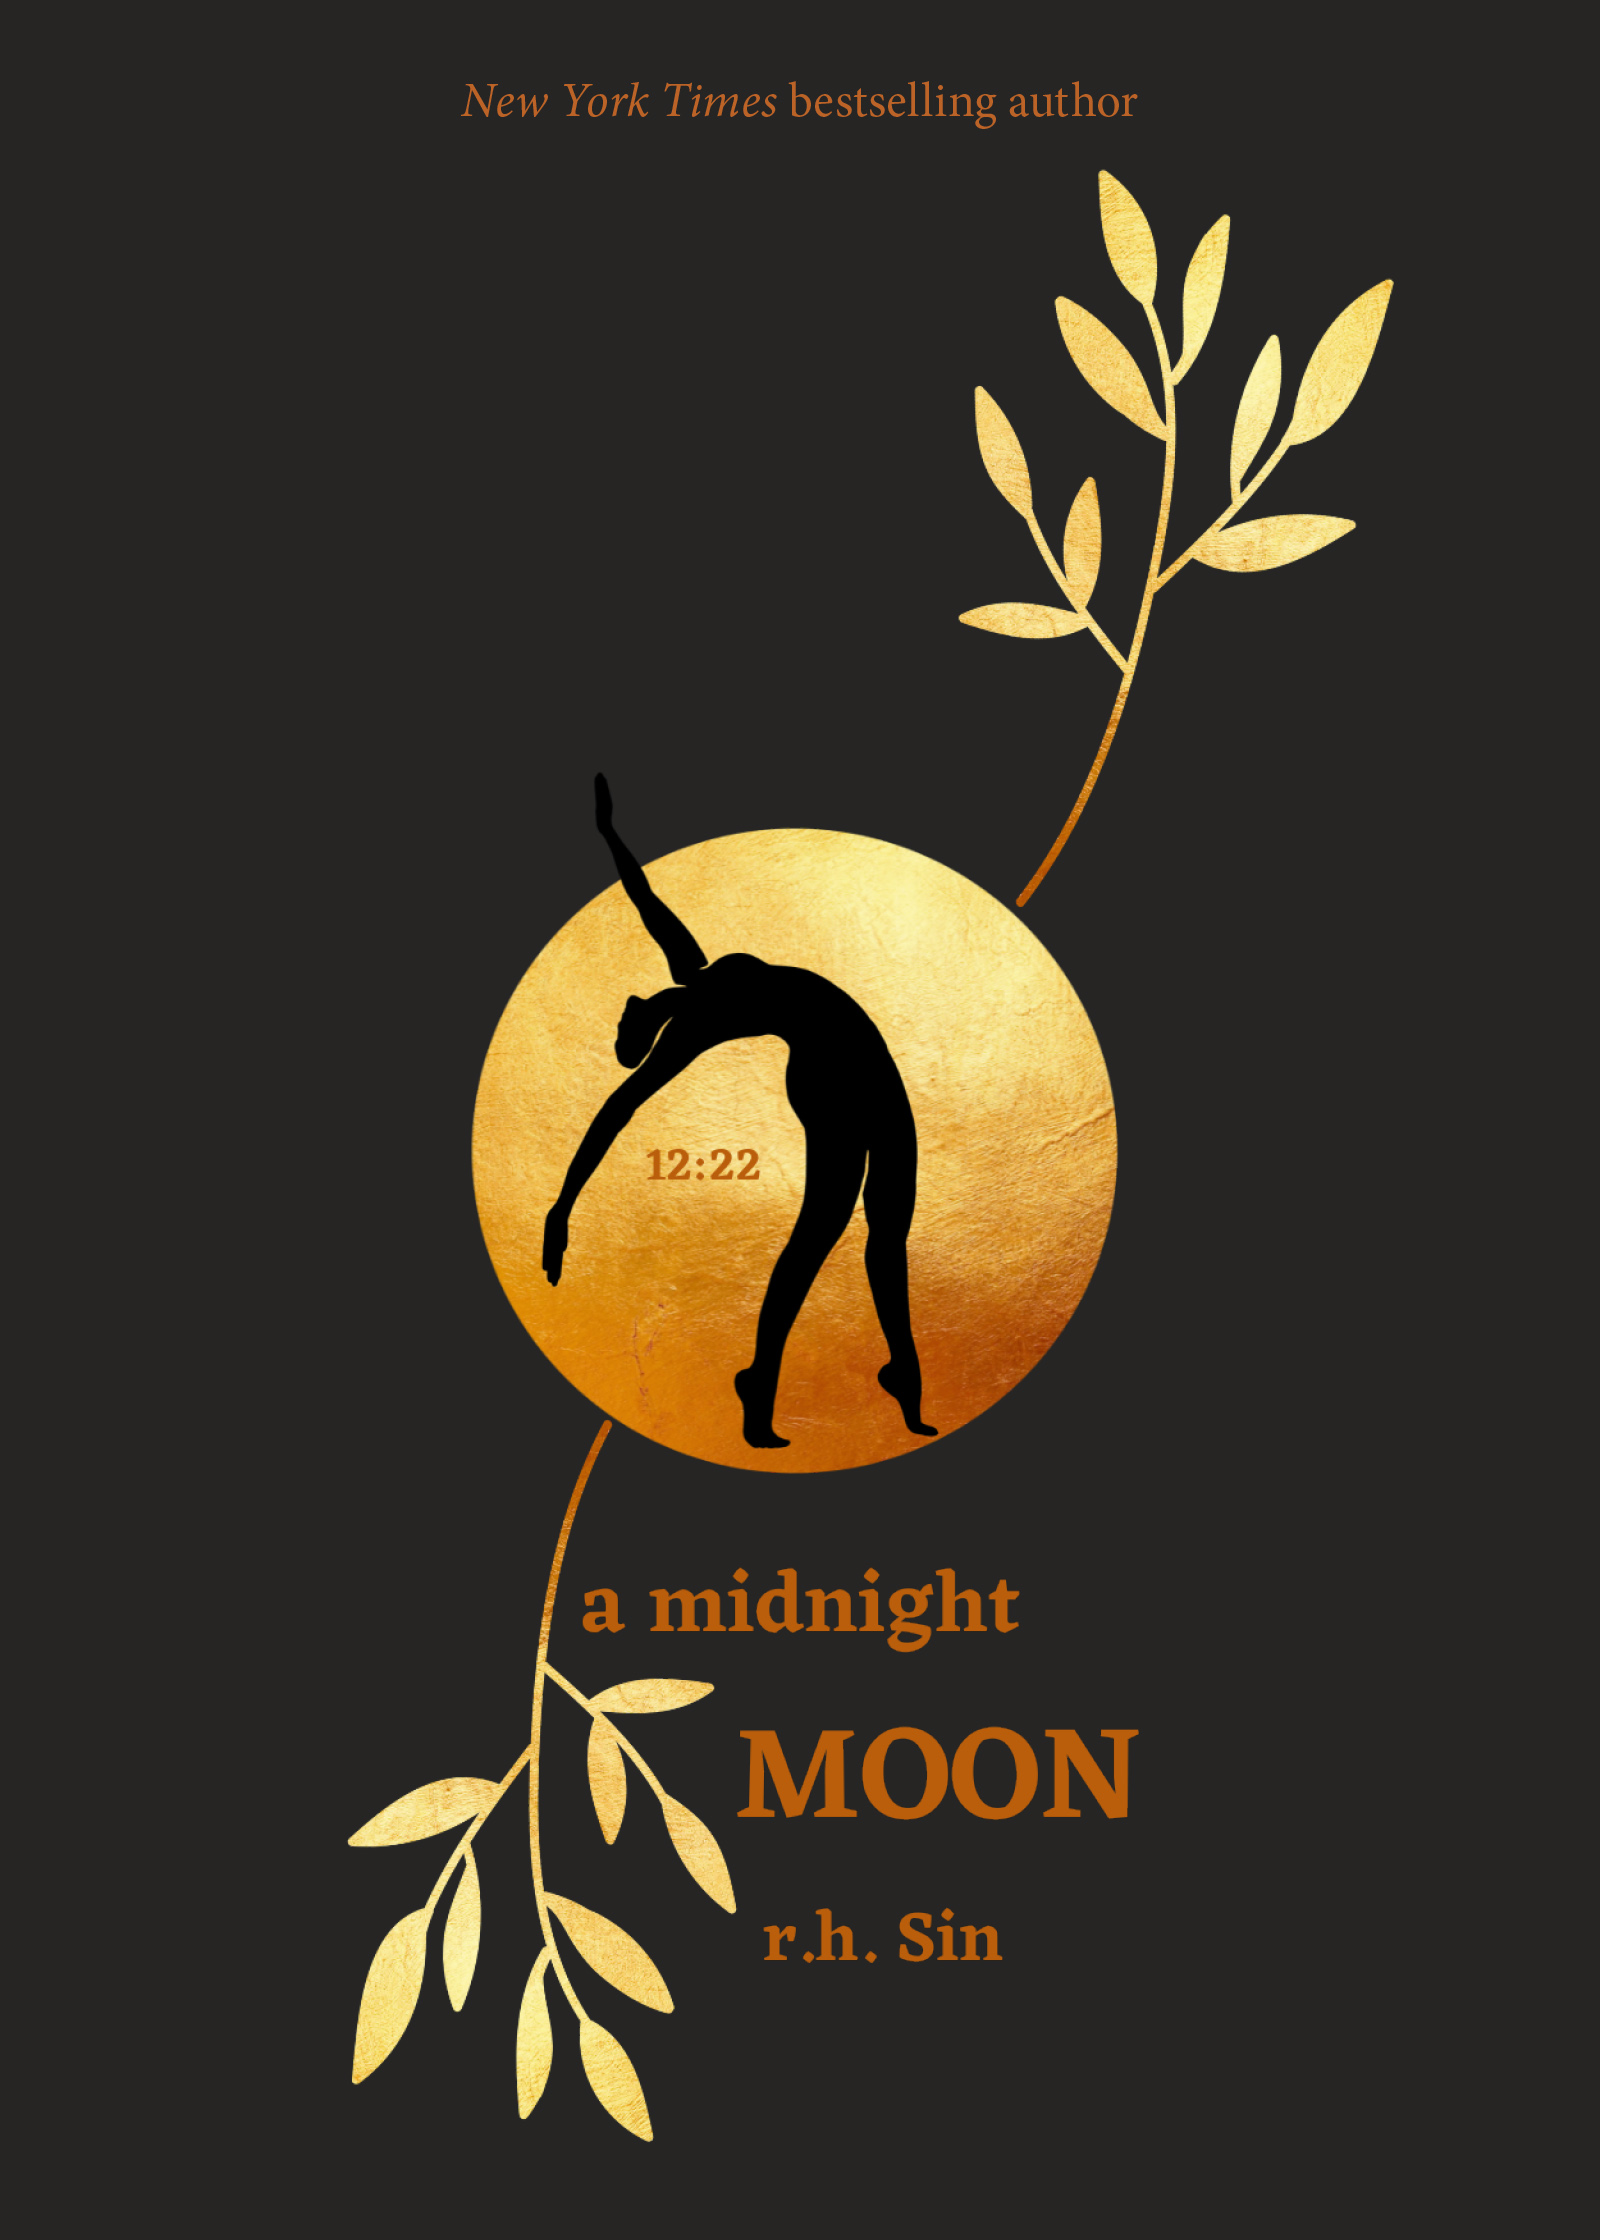 A Midnight Moon